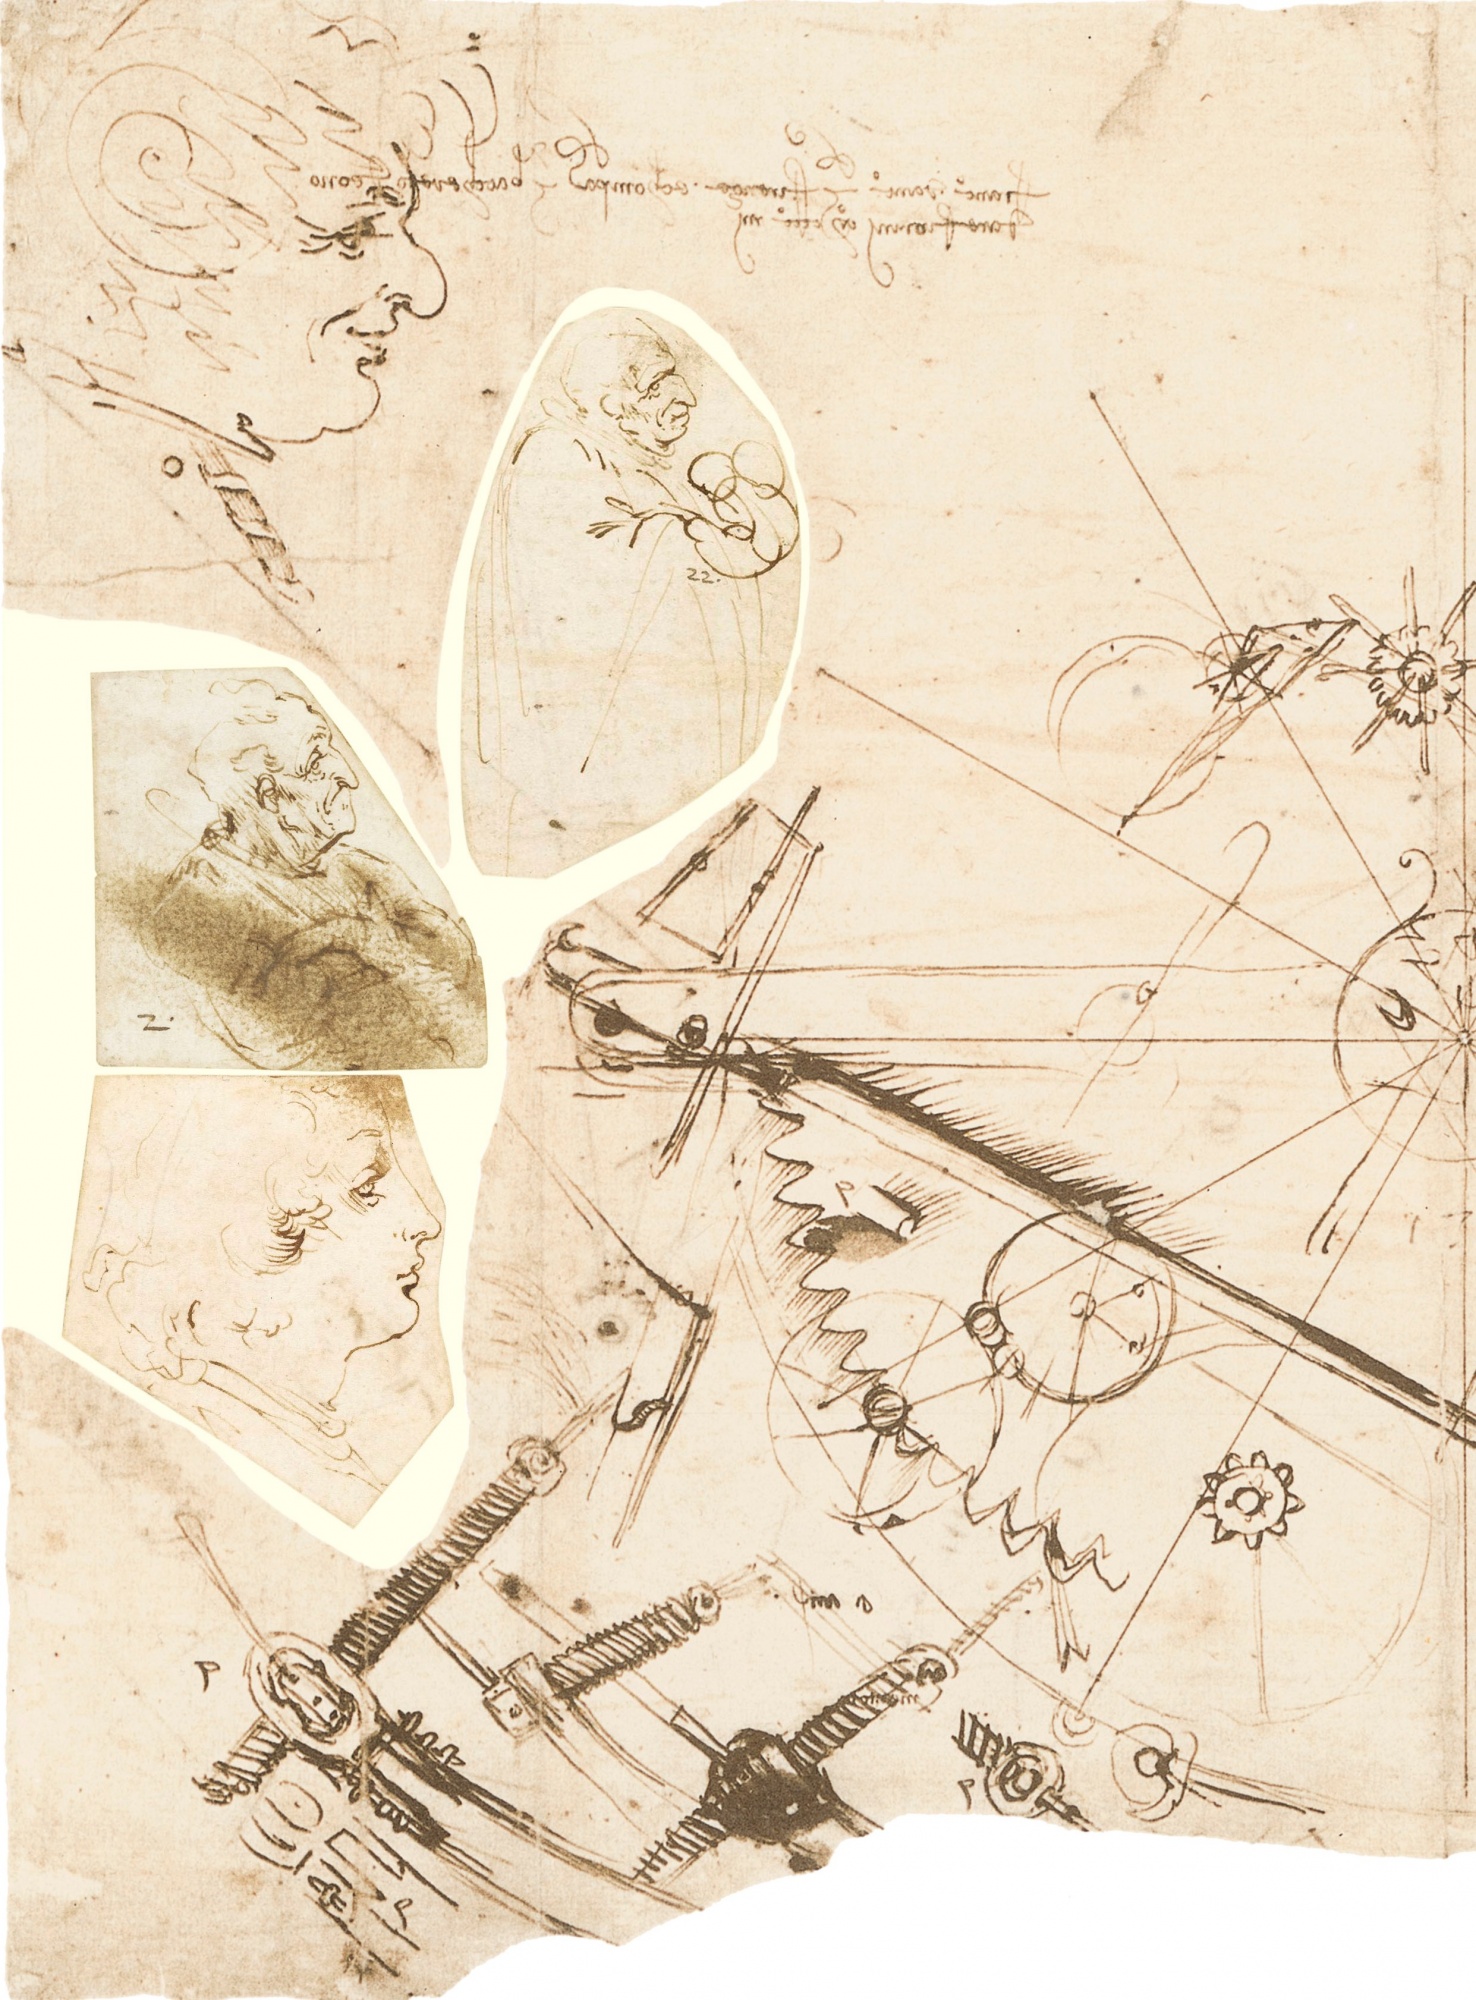 A detail taken from Codex Atlanticus of Leonardo da Vinci